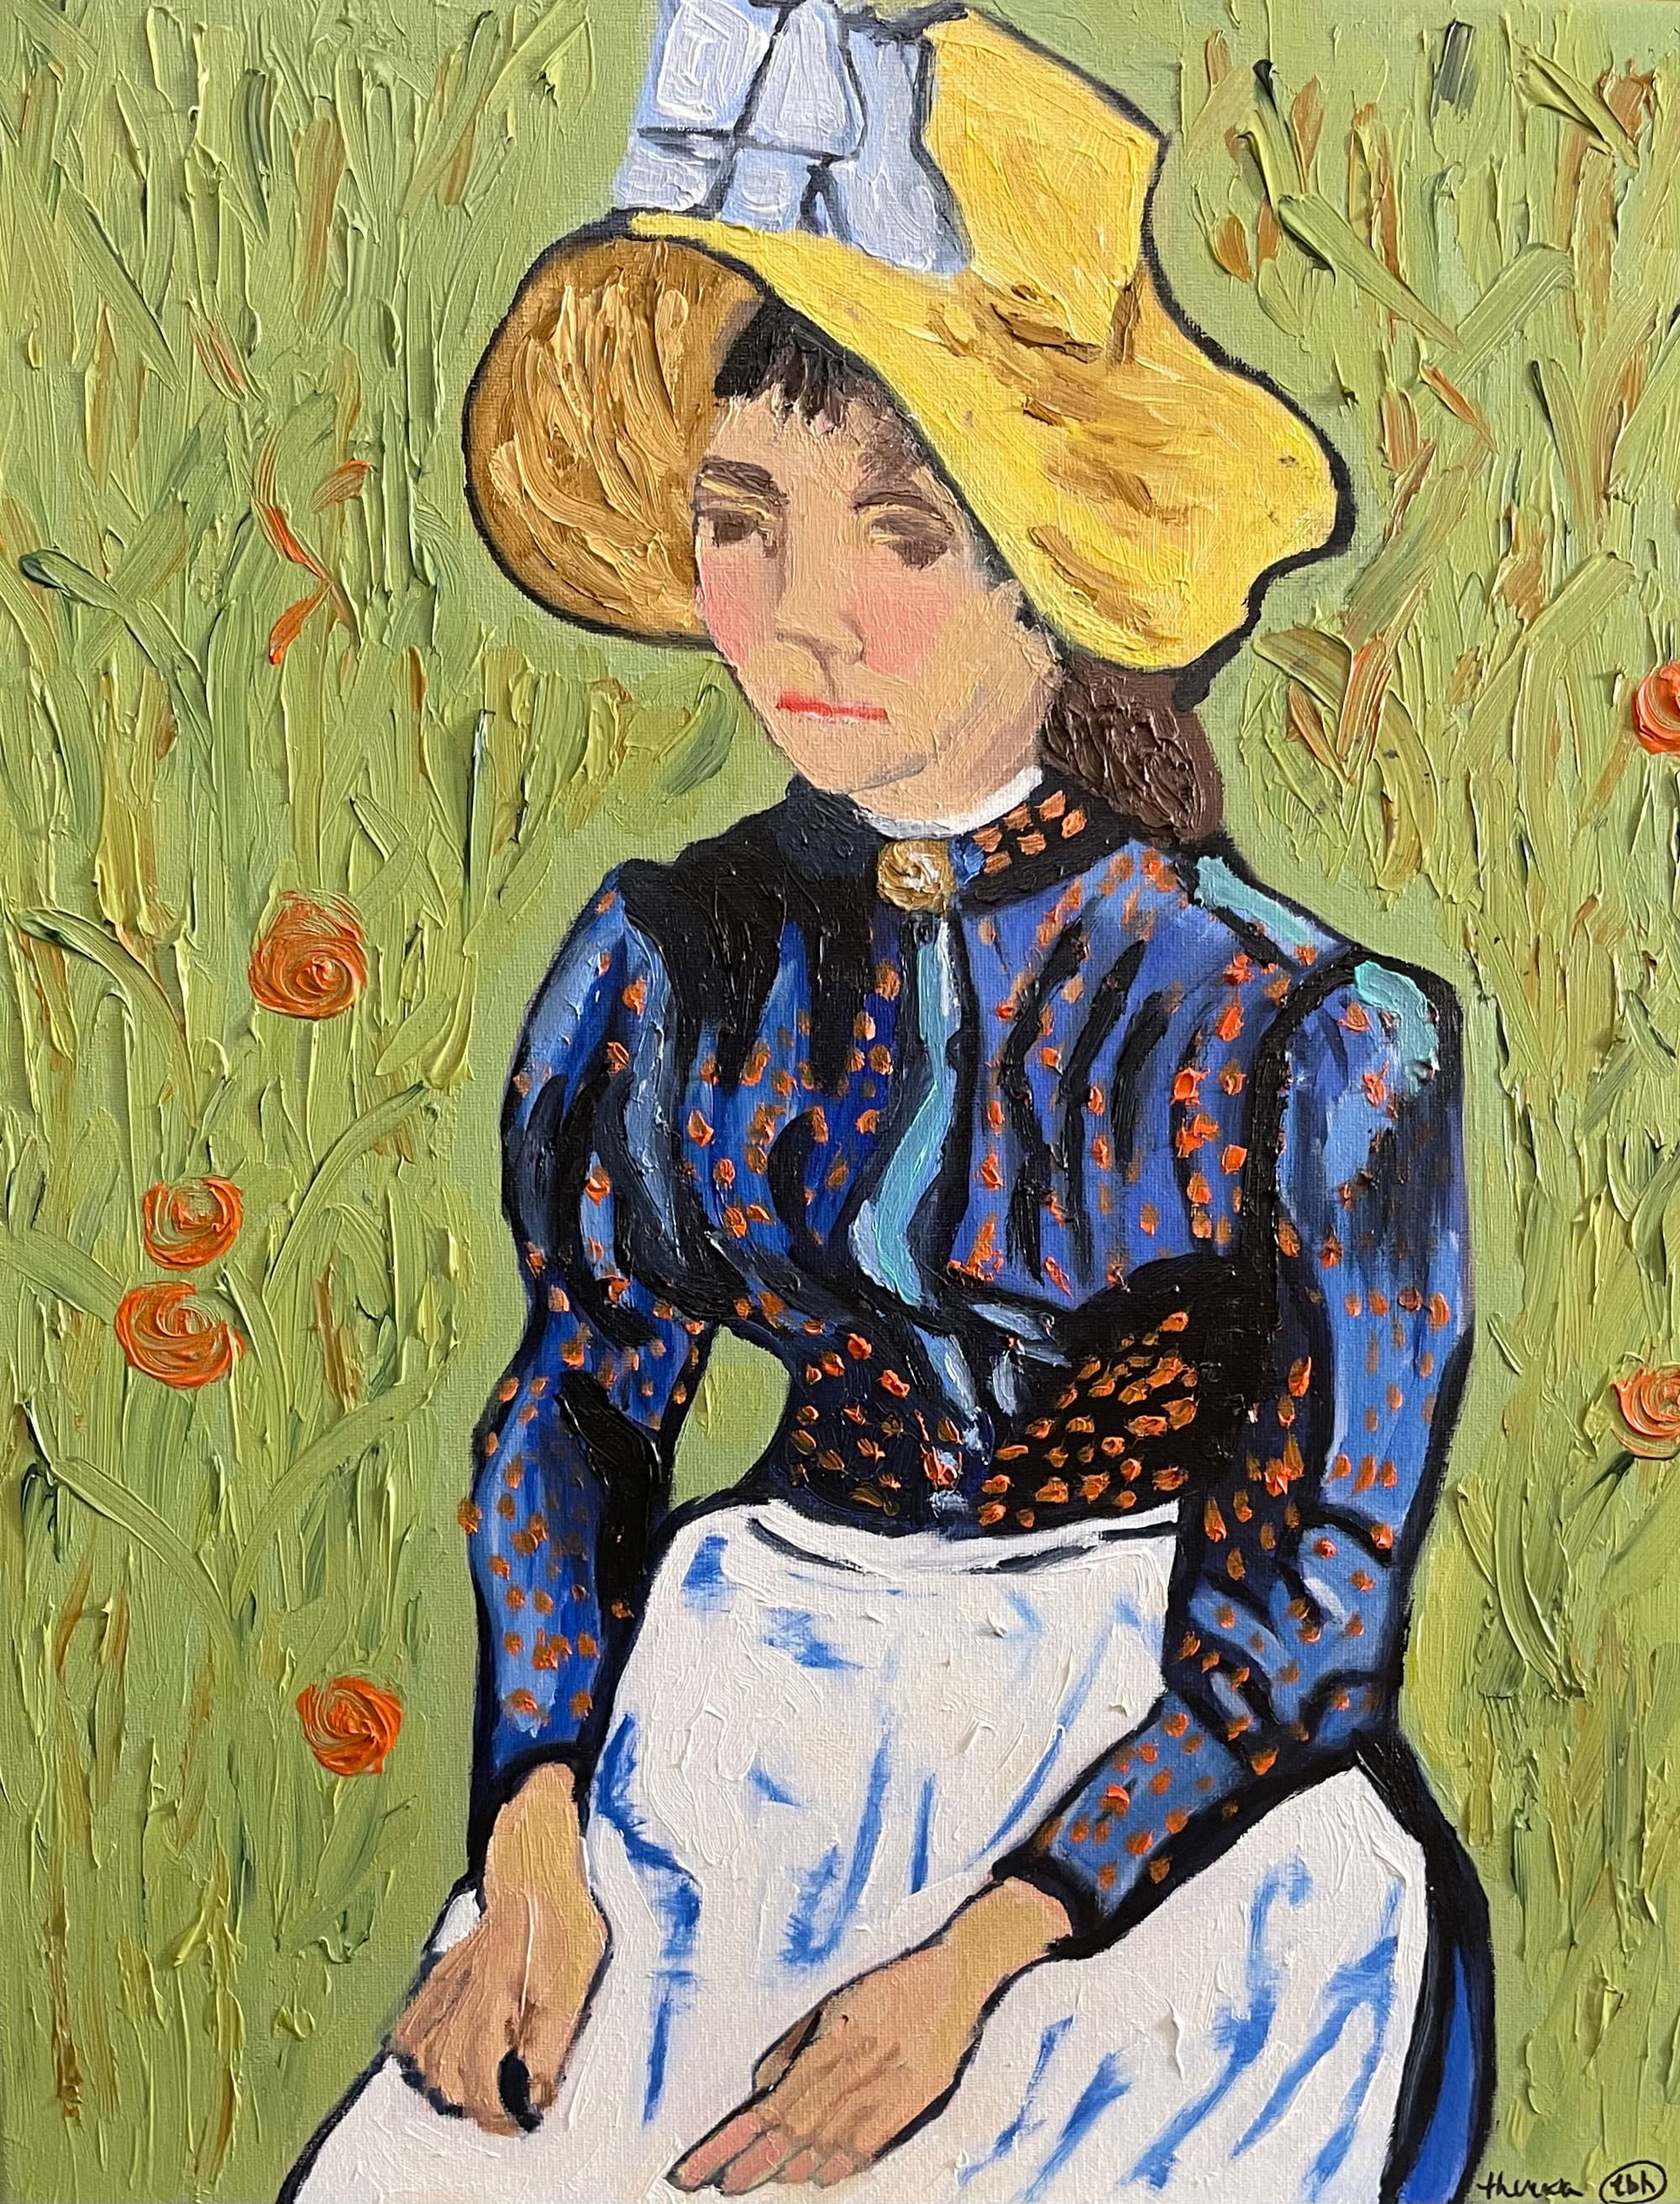 SOLD - Peasant Woman (after Van Gogh)